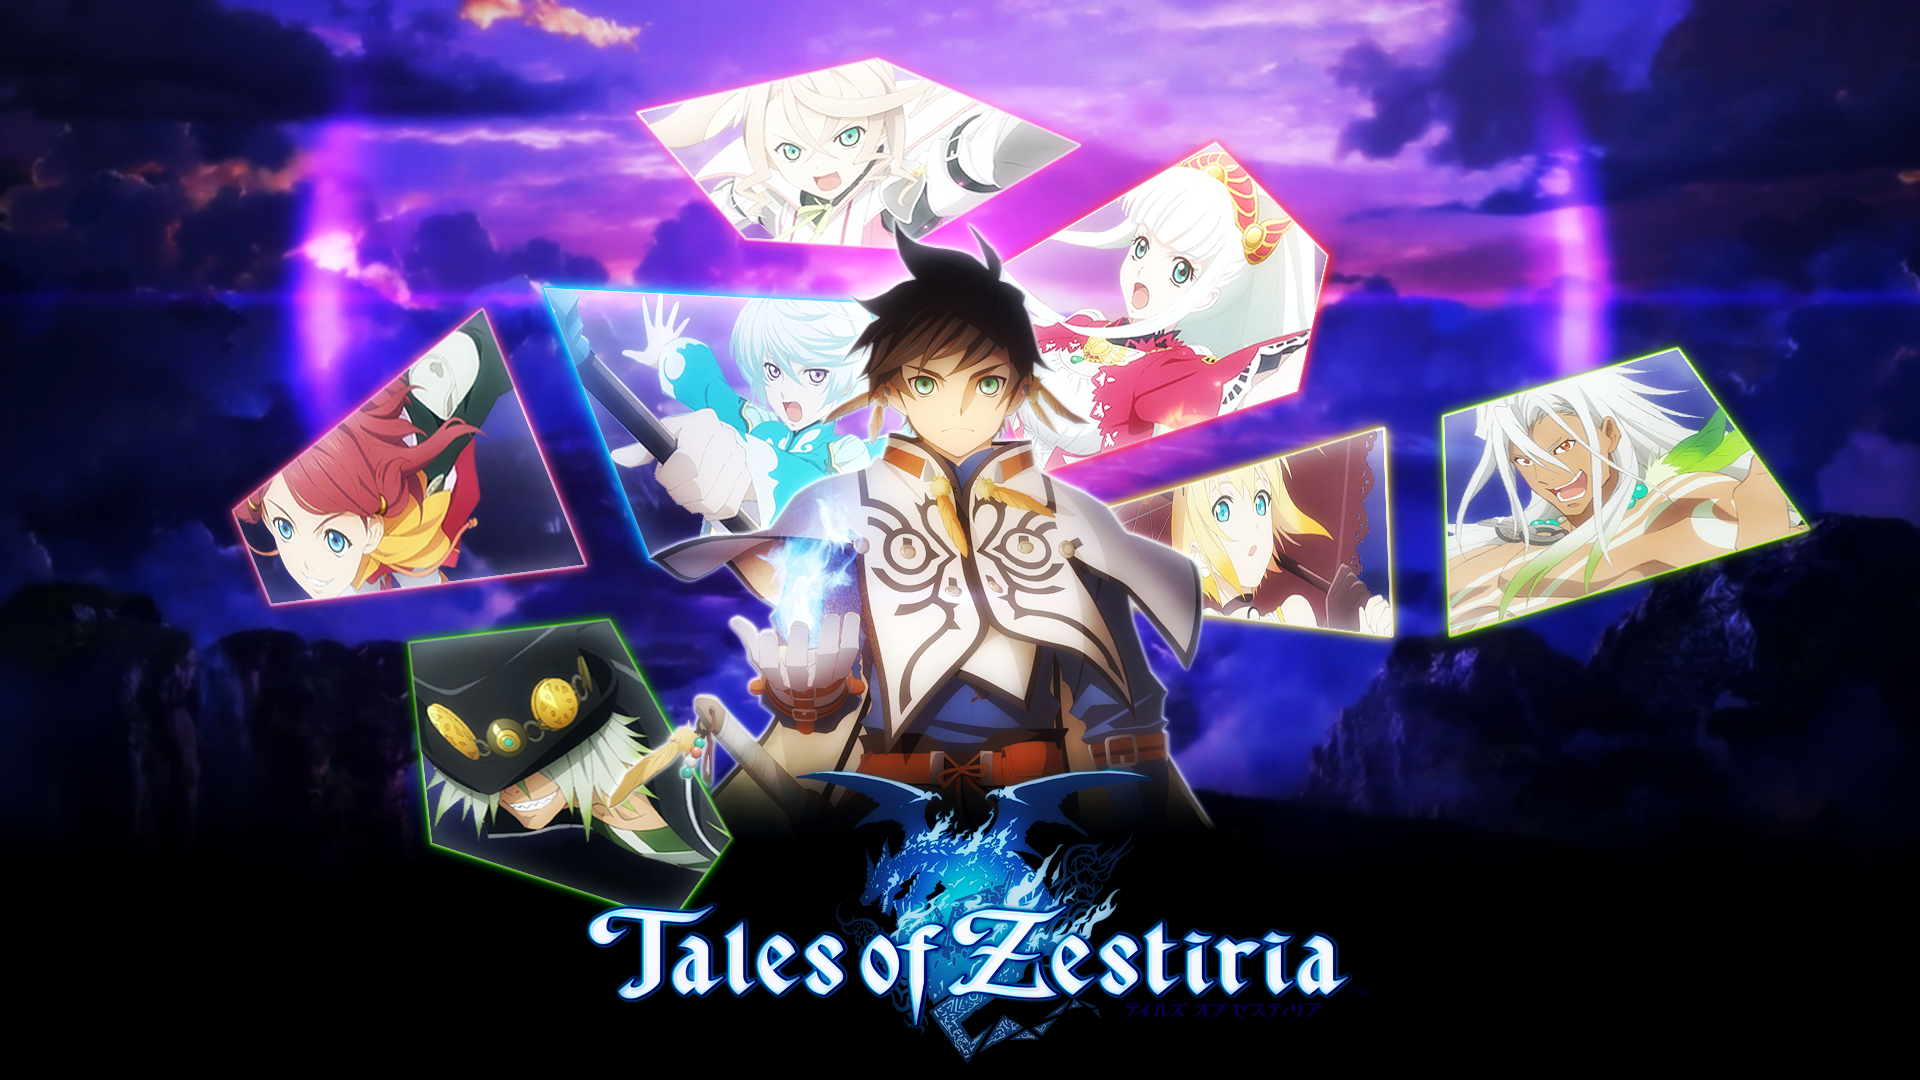 Ver Tales of Zestiria the X, Season 2